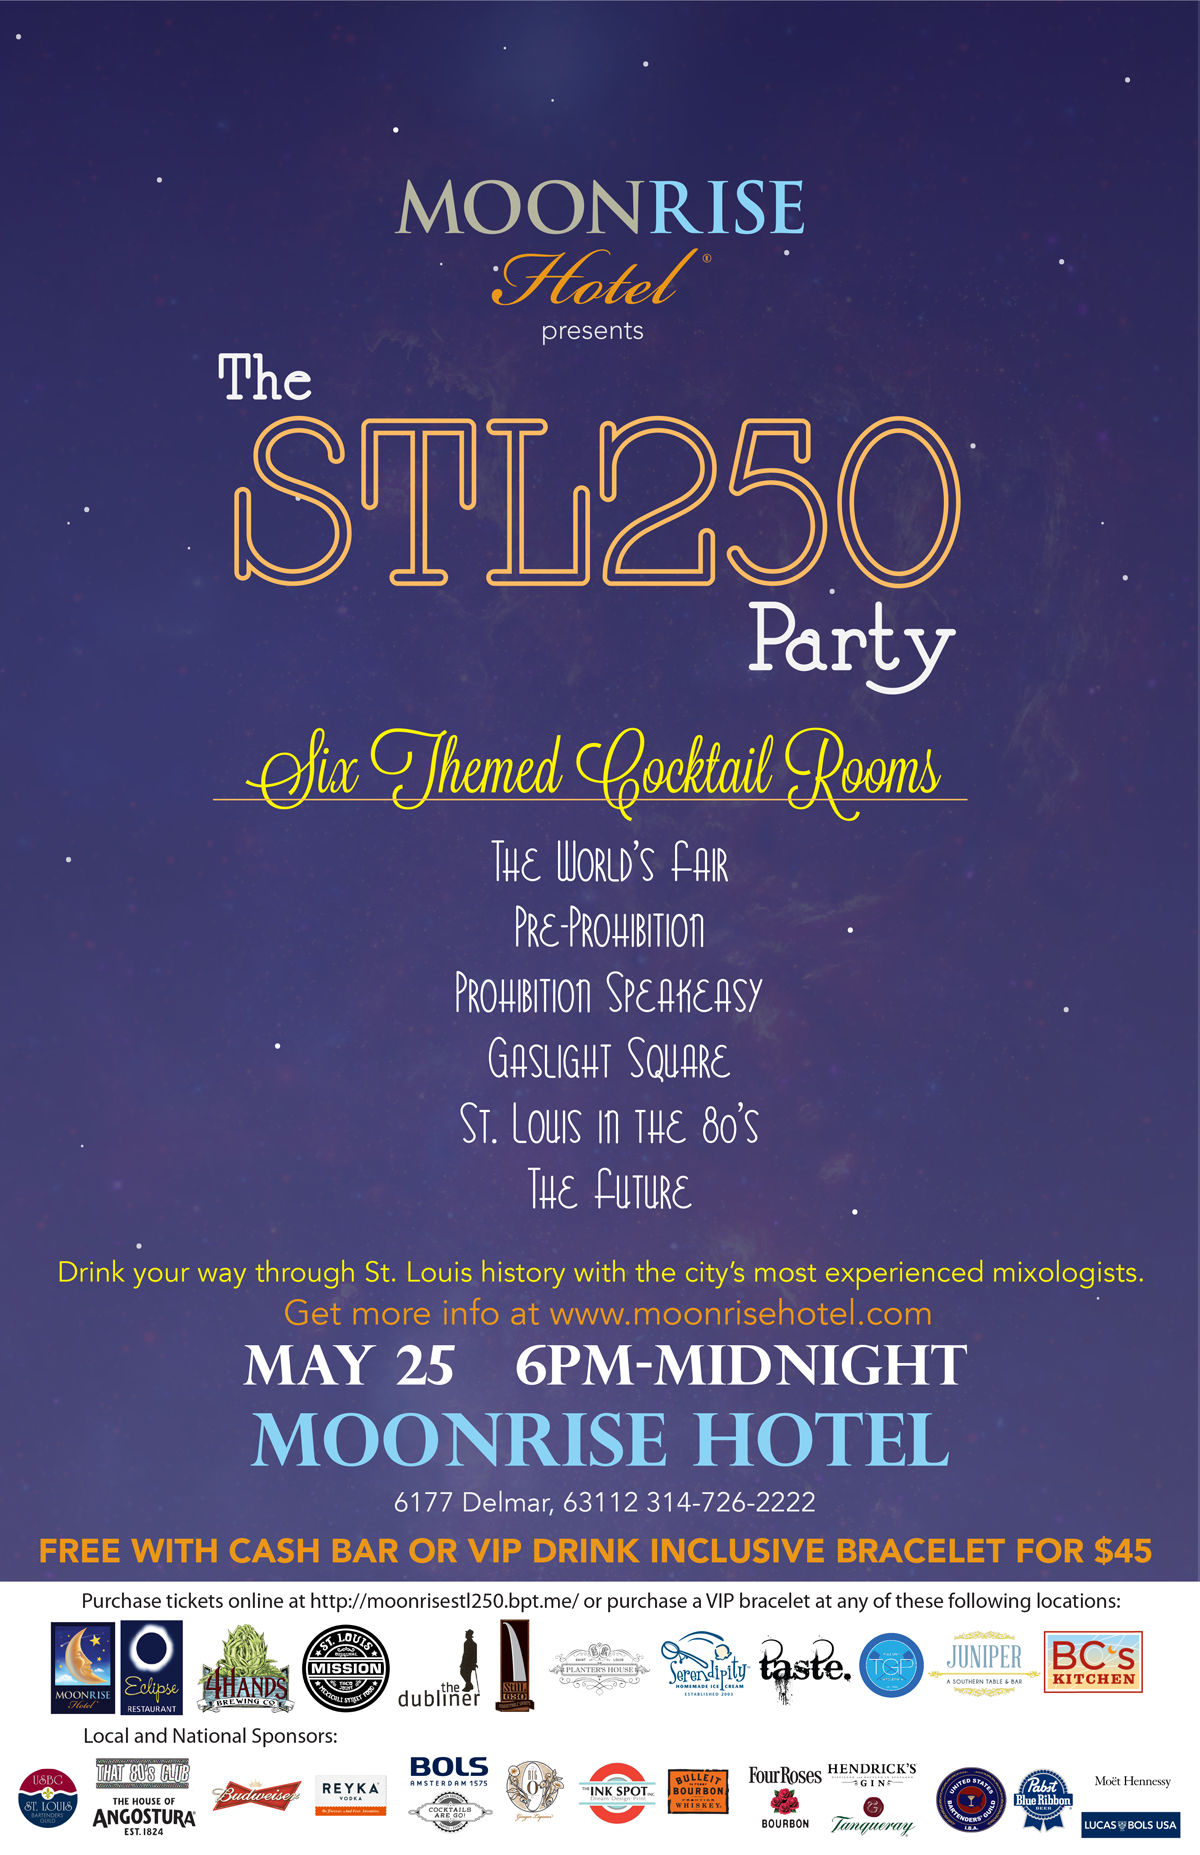 STL250 Event at Moonrise Hotel | St. Louis Birthday